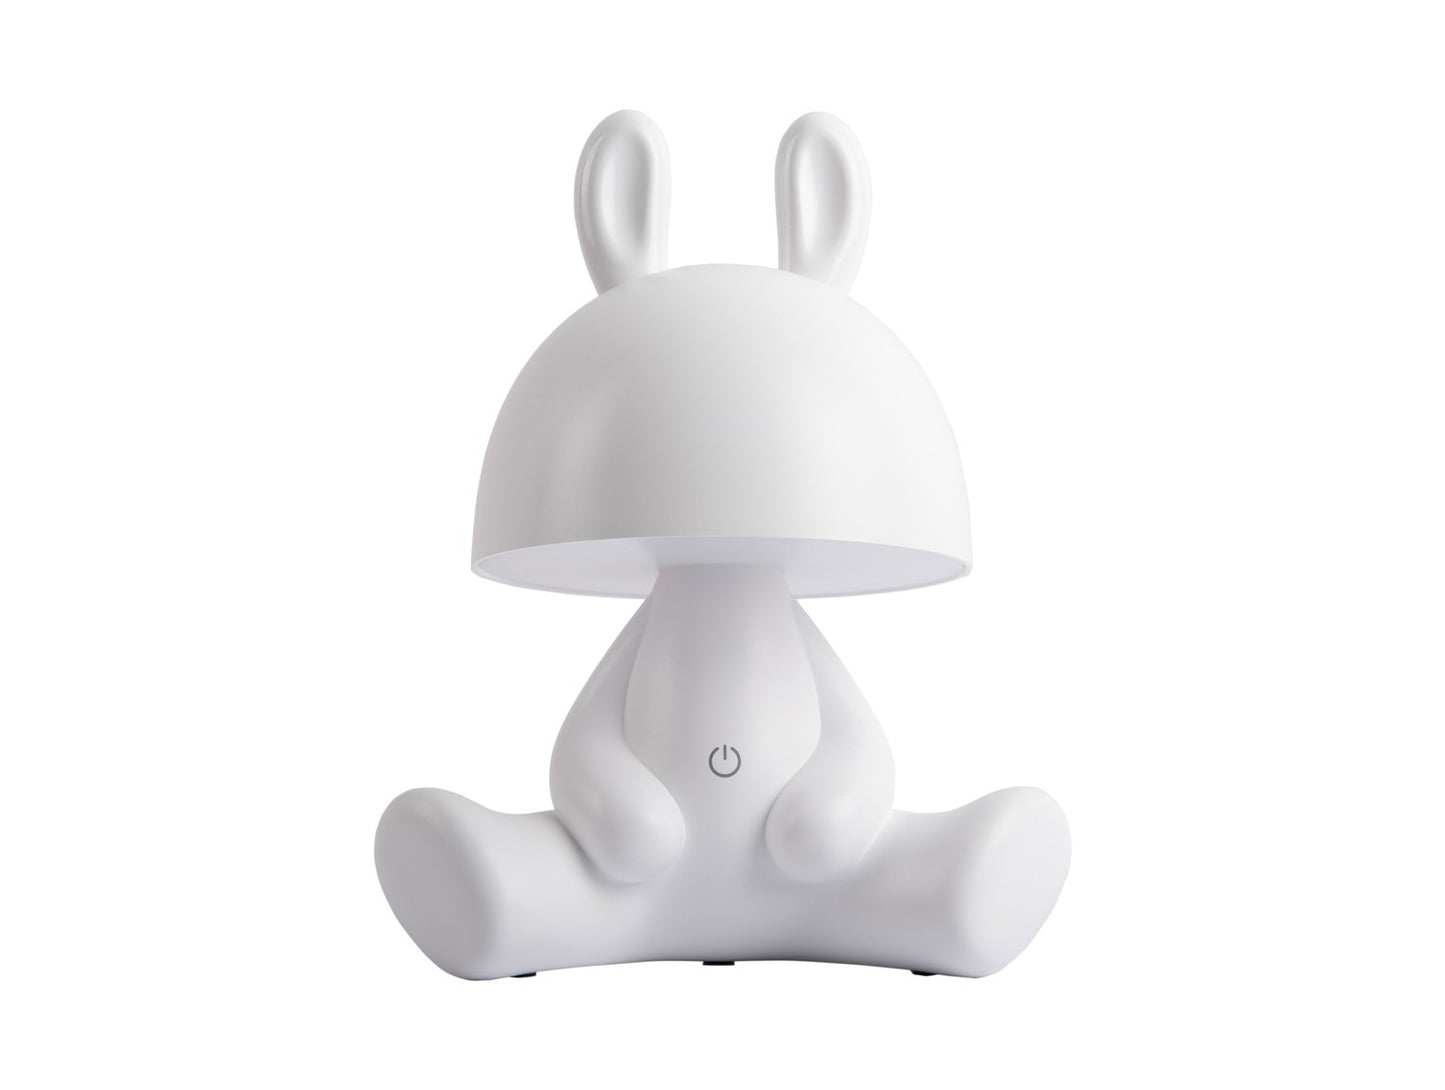 Table Lamp Bunny